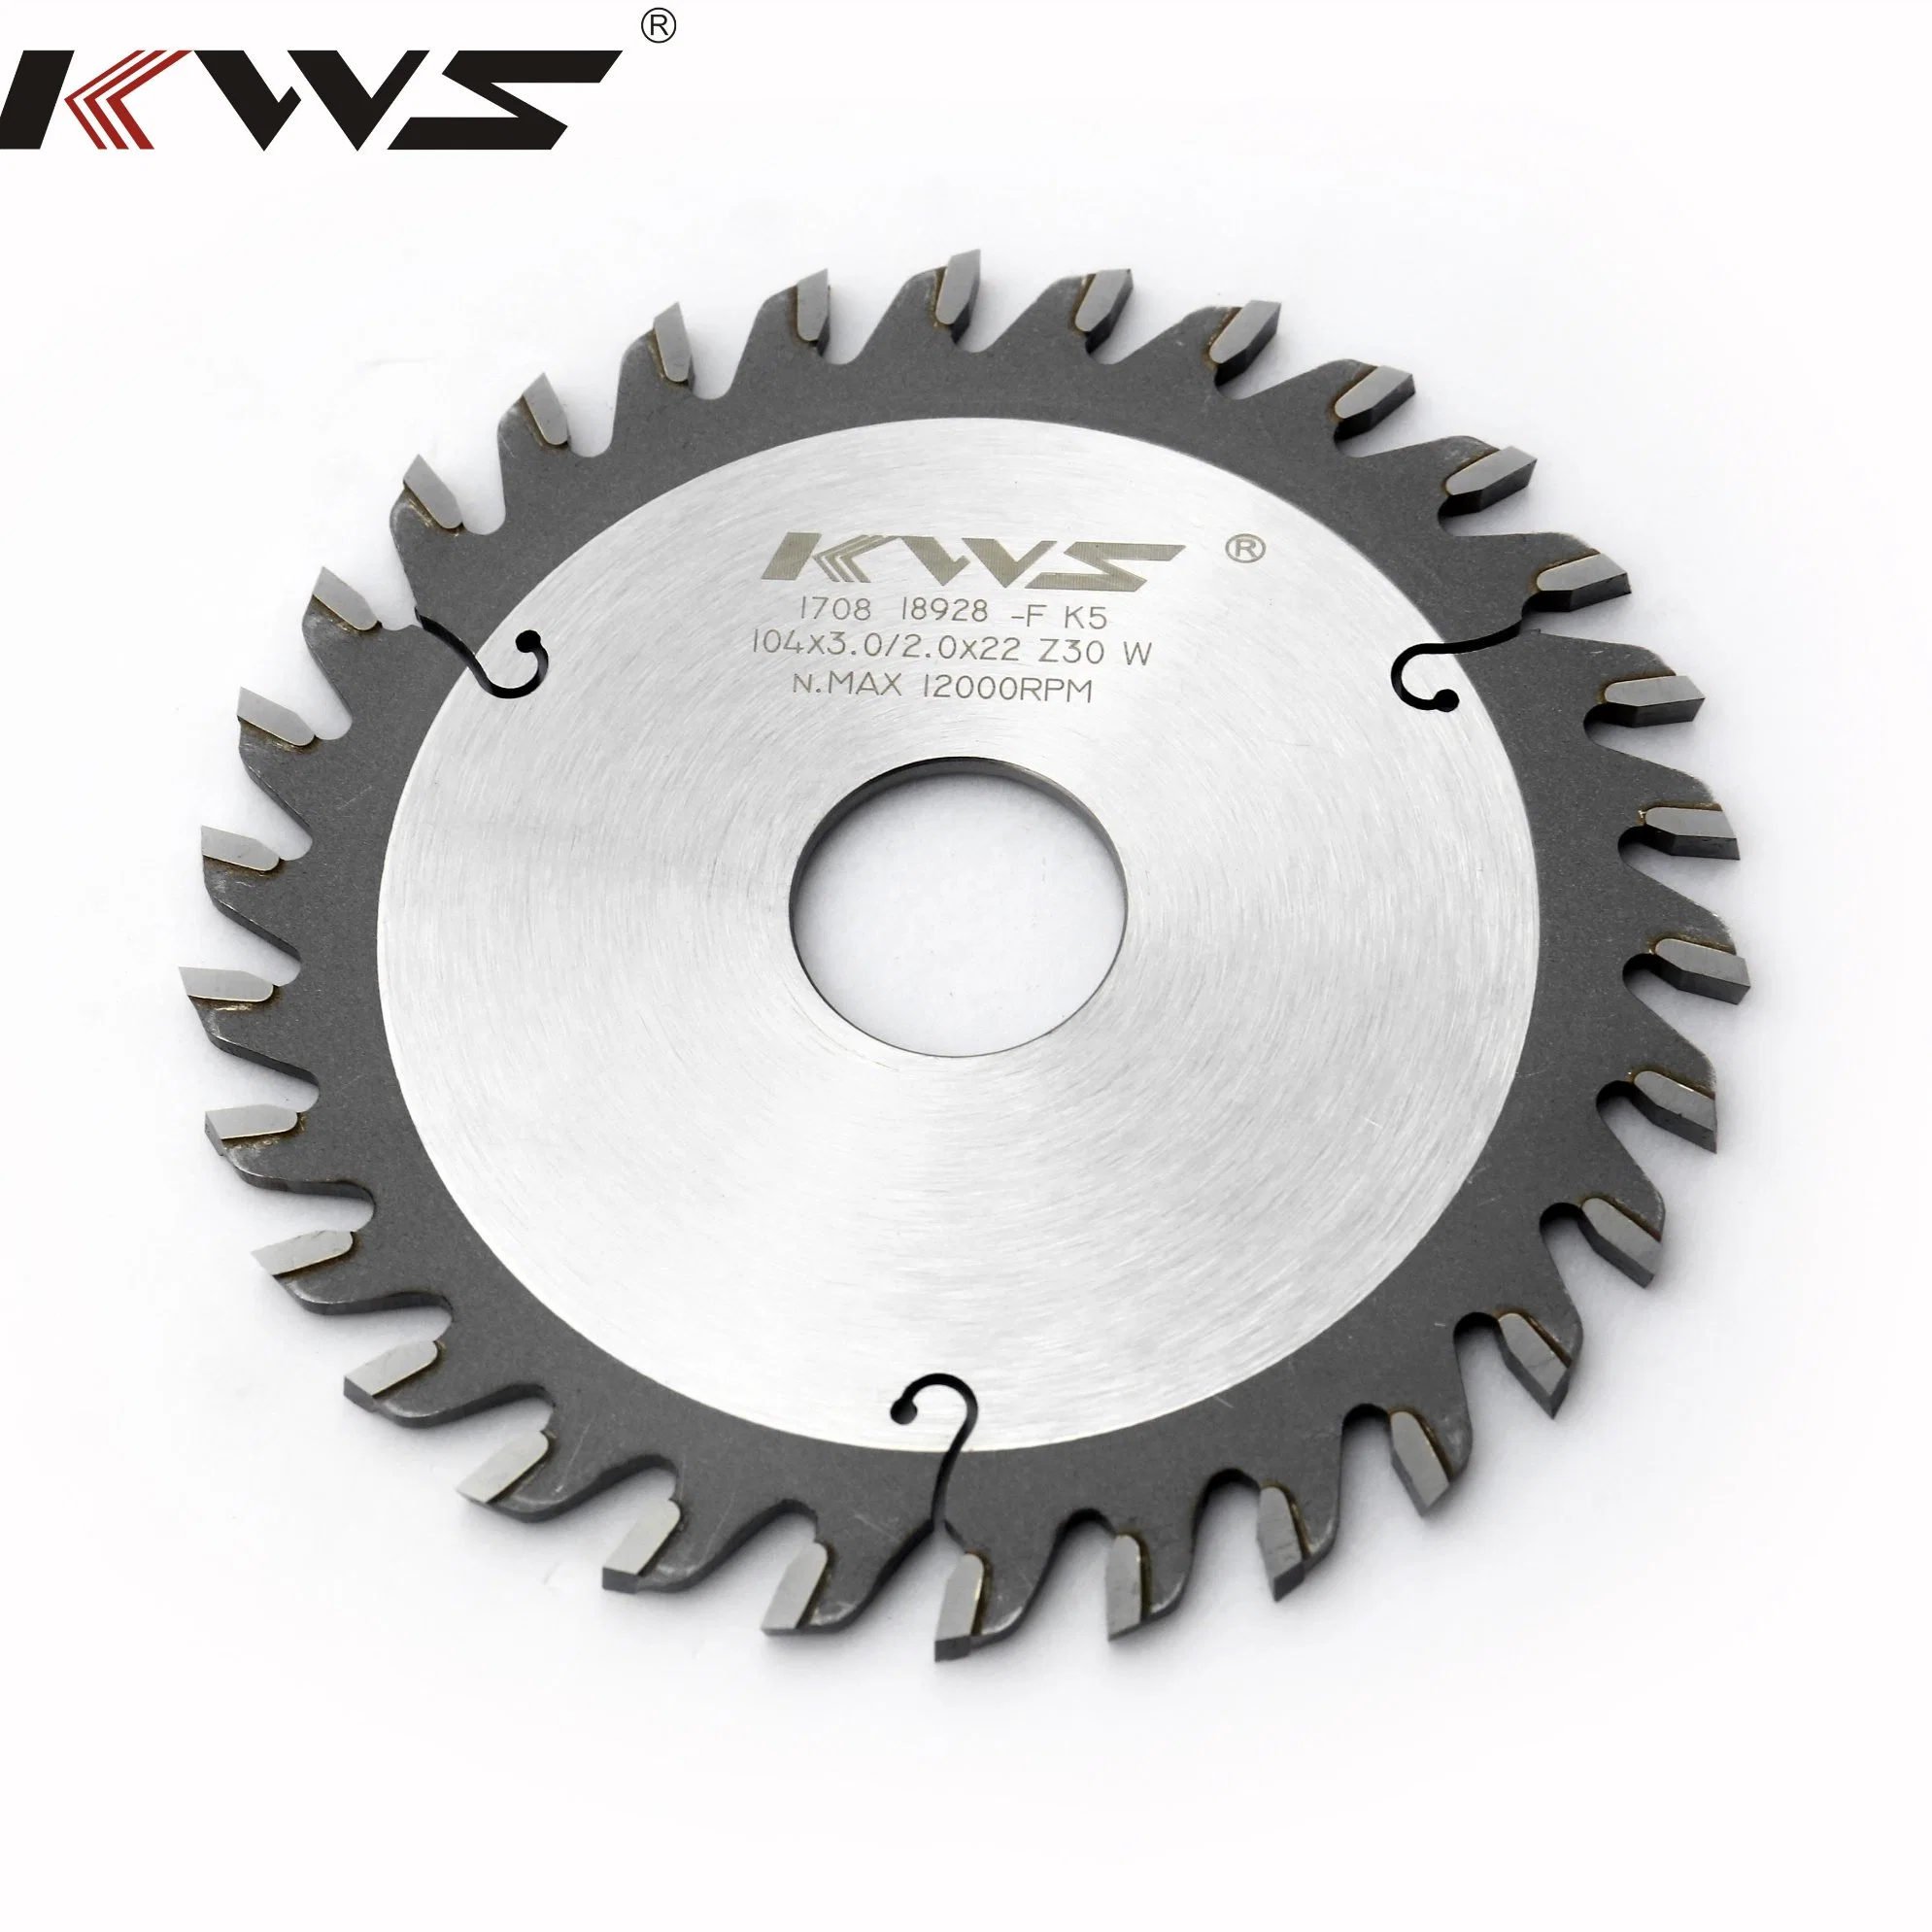 New Product Kws Tct Carbide Circular Single Conical Scoring Saw Blade Wood Cutting Woodworking Tool